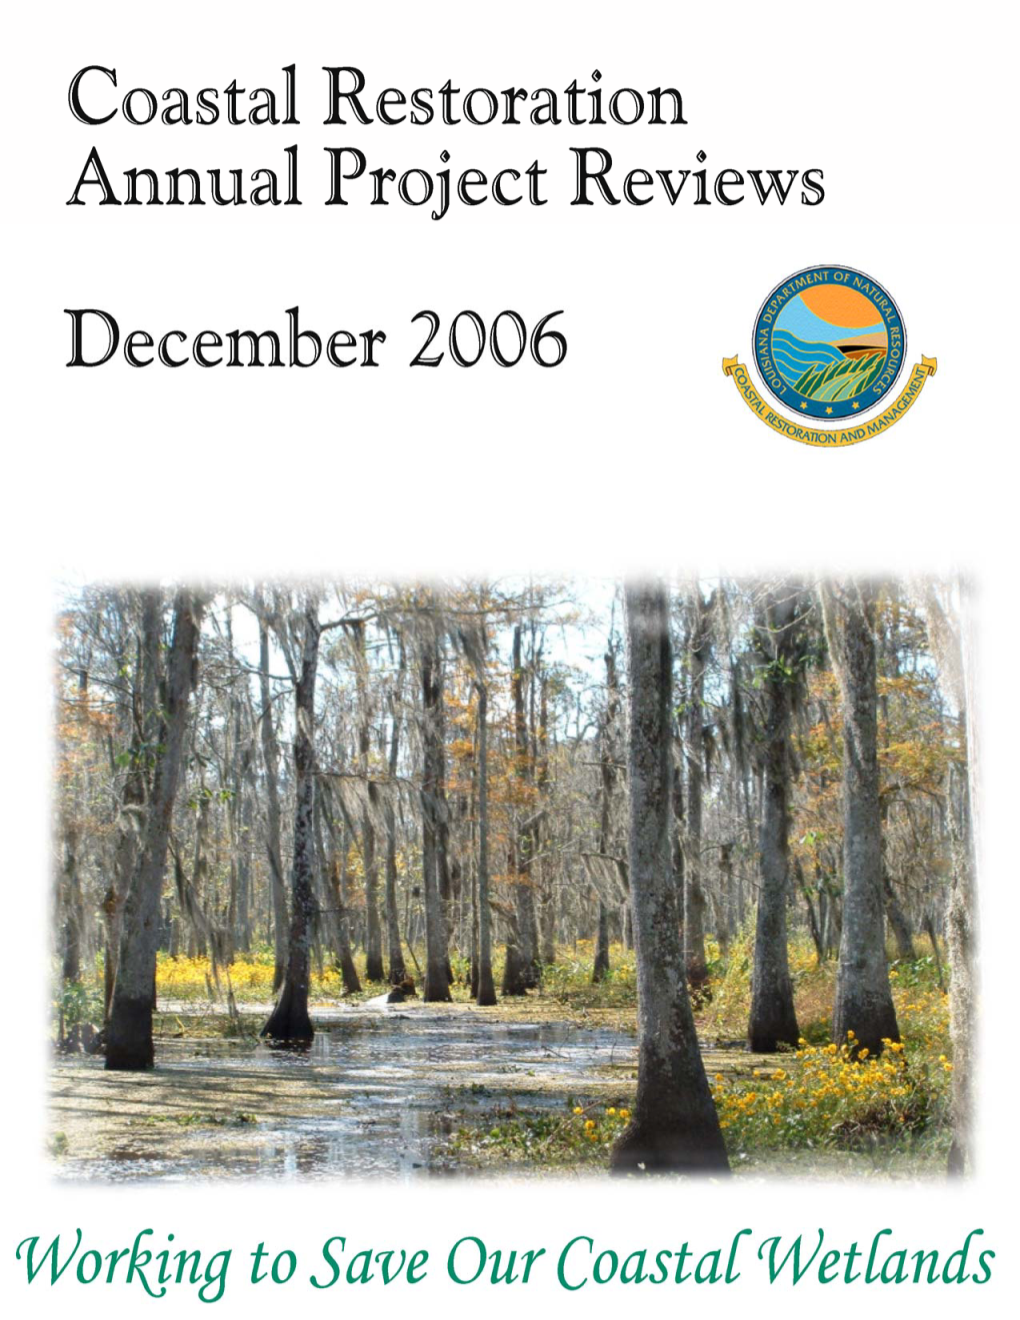 An Introduction to Coastal Restoration in Louisiana